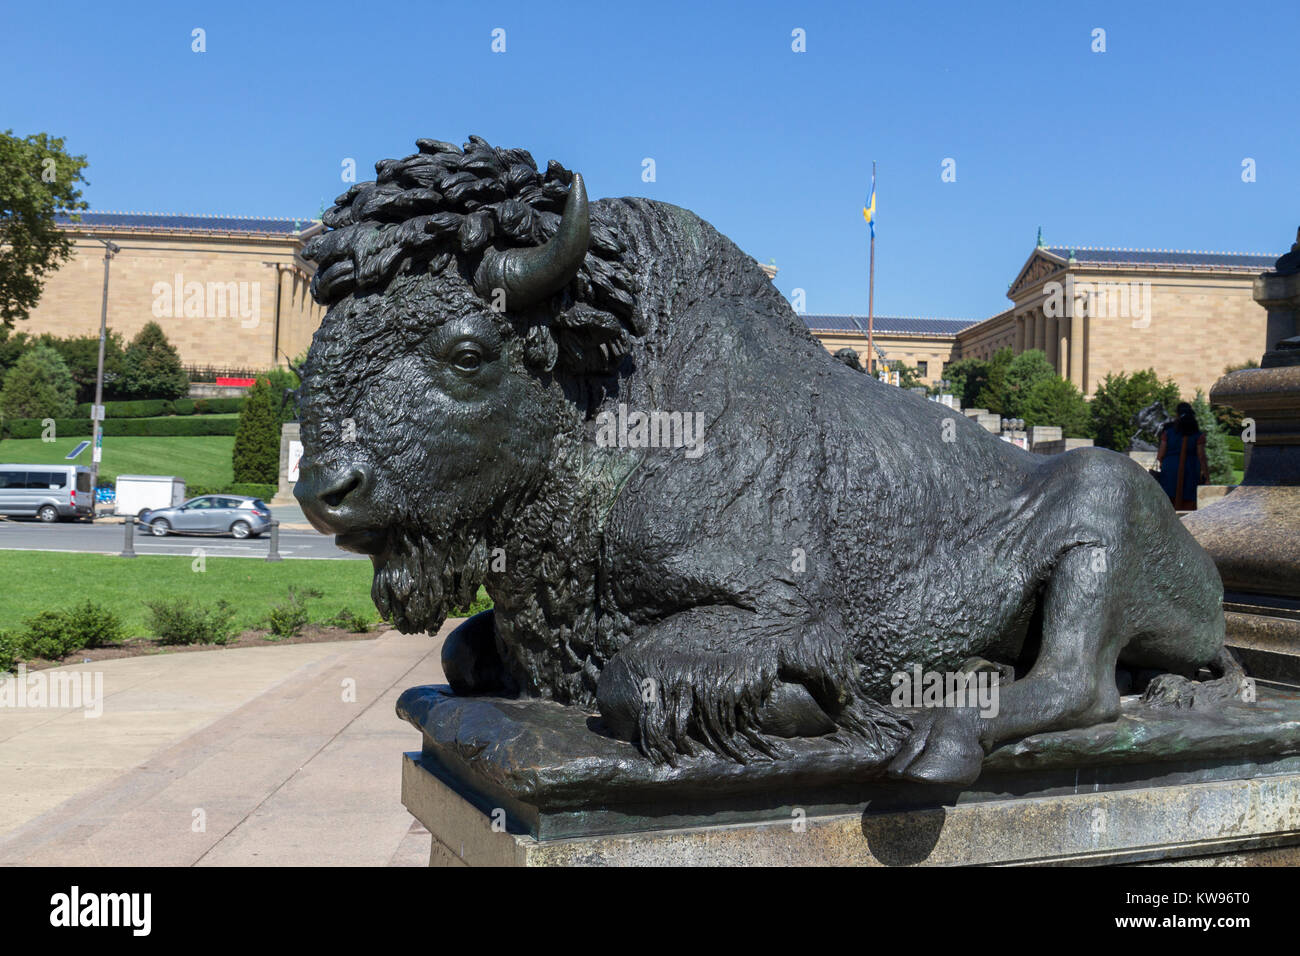 The Buffalo sculpture on the Washington Monument Fountain, Eakins Oval, Philadelphia, Pennsylvania, USA. Stock Photo